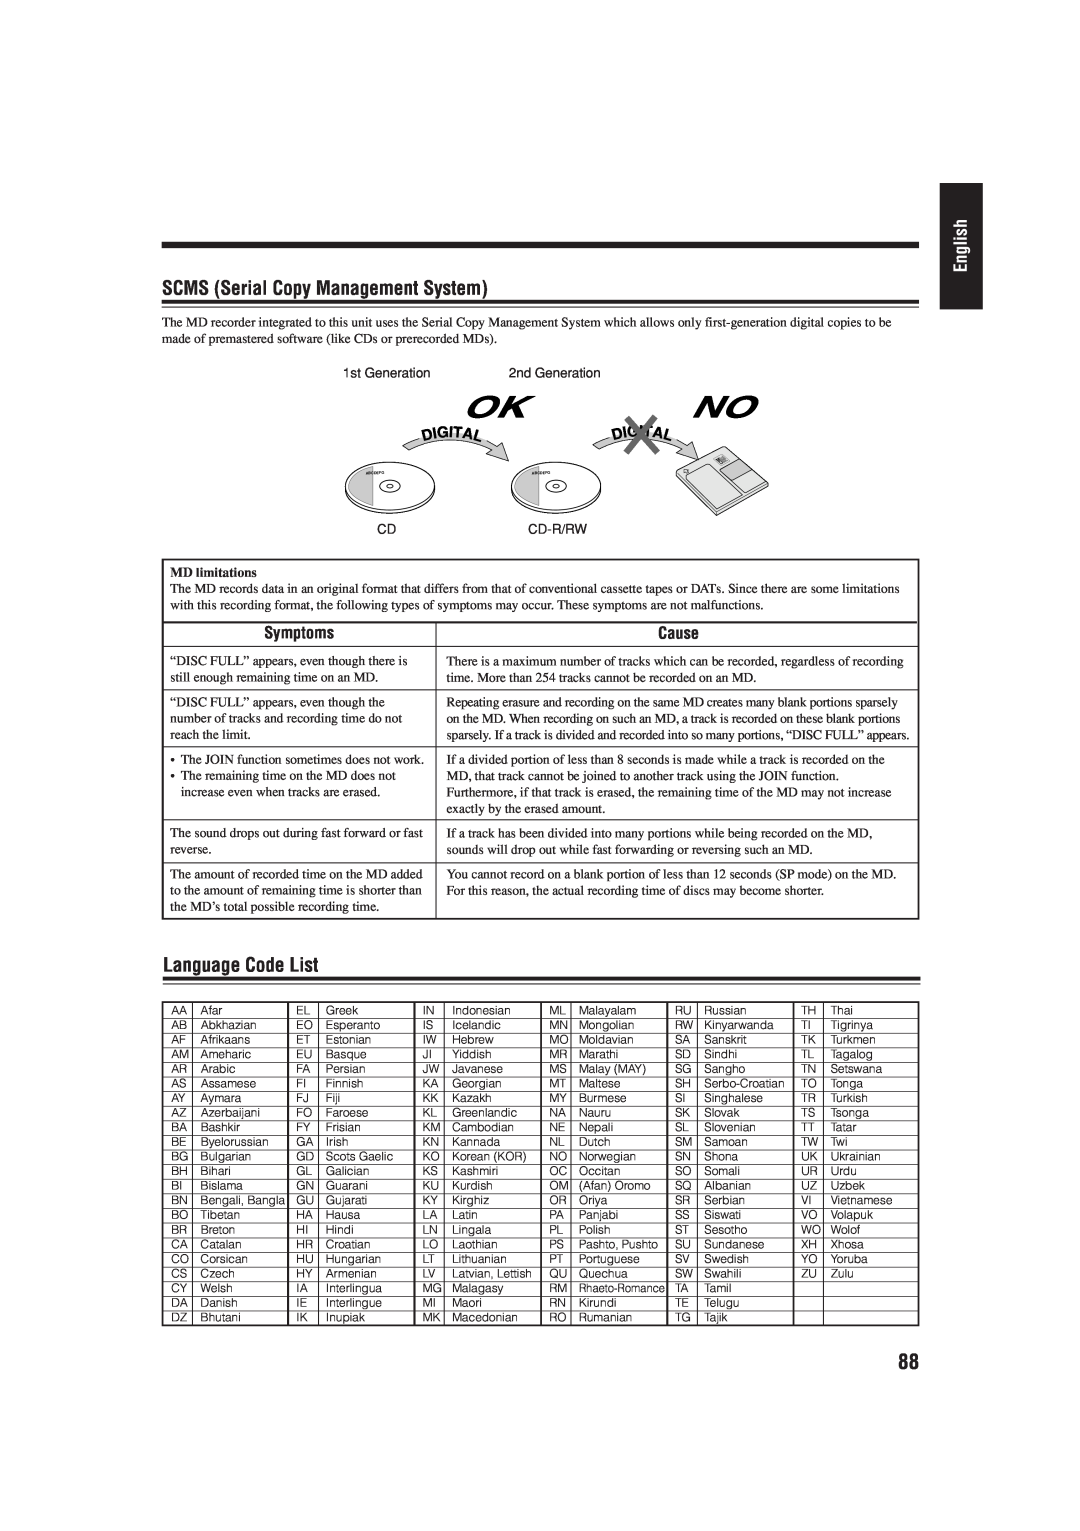 JVC UX-J99DVD manual SCMS Serial Copy Management System, Language Code List, Symptoms, Cause, English, MD limitations 